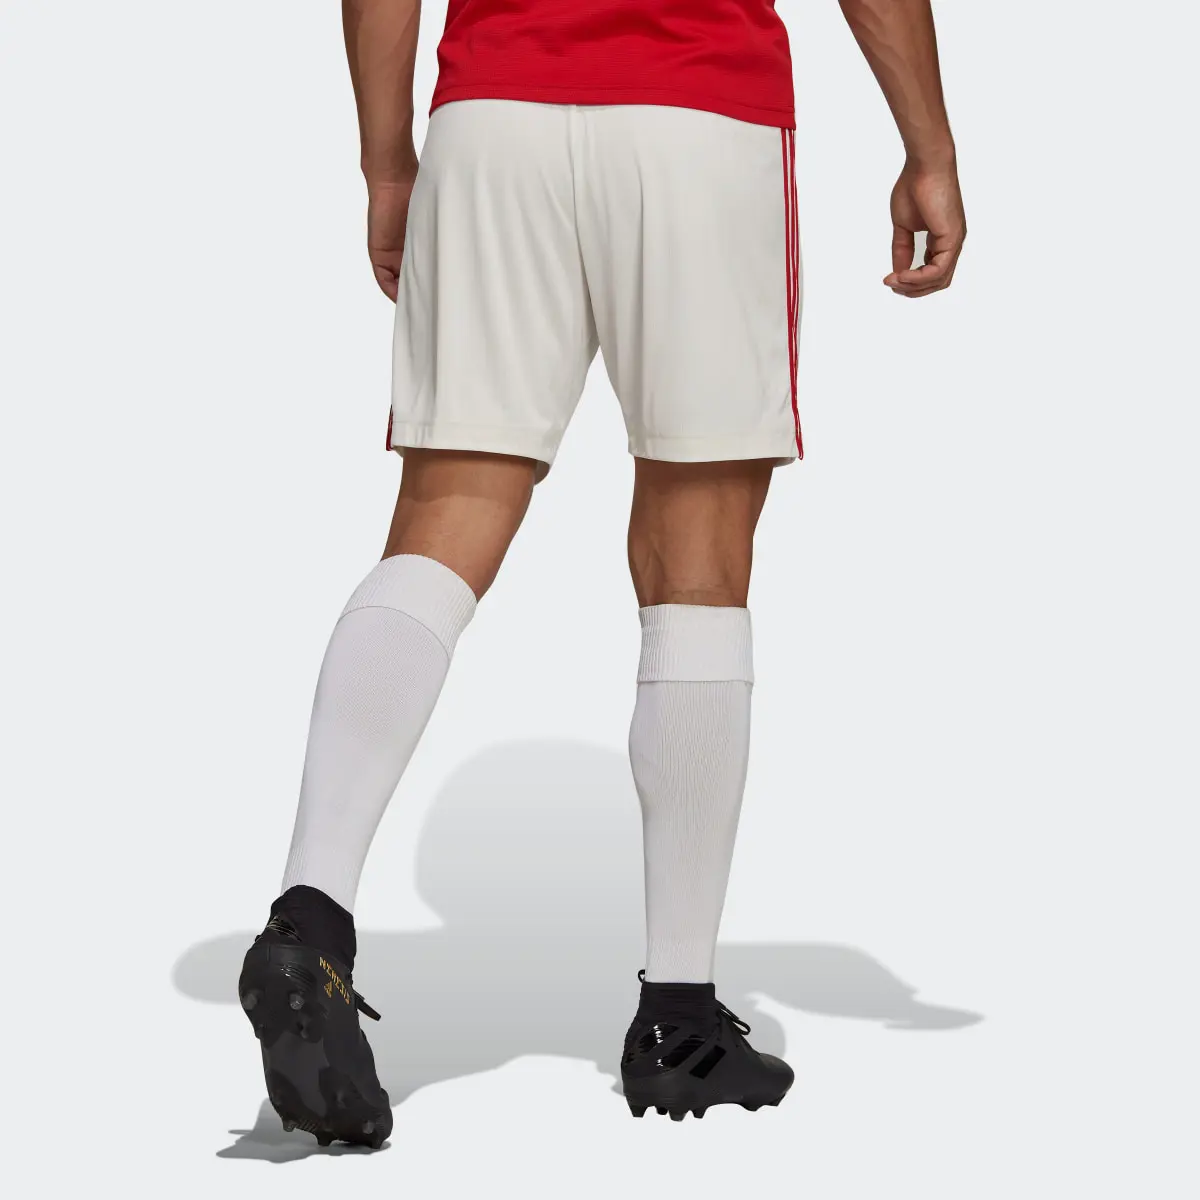 Adidas Shorts Local Manchester United 21/22. 2